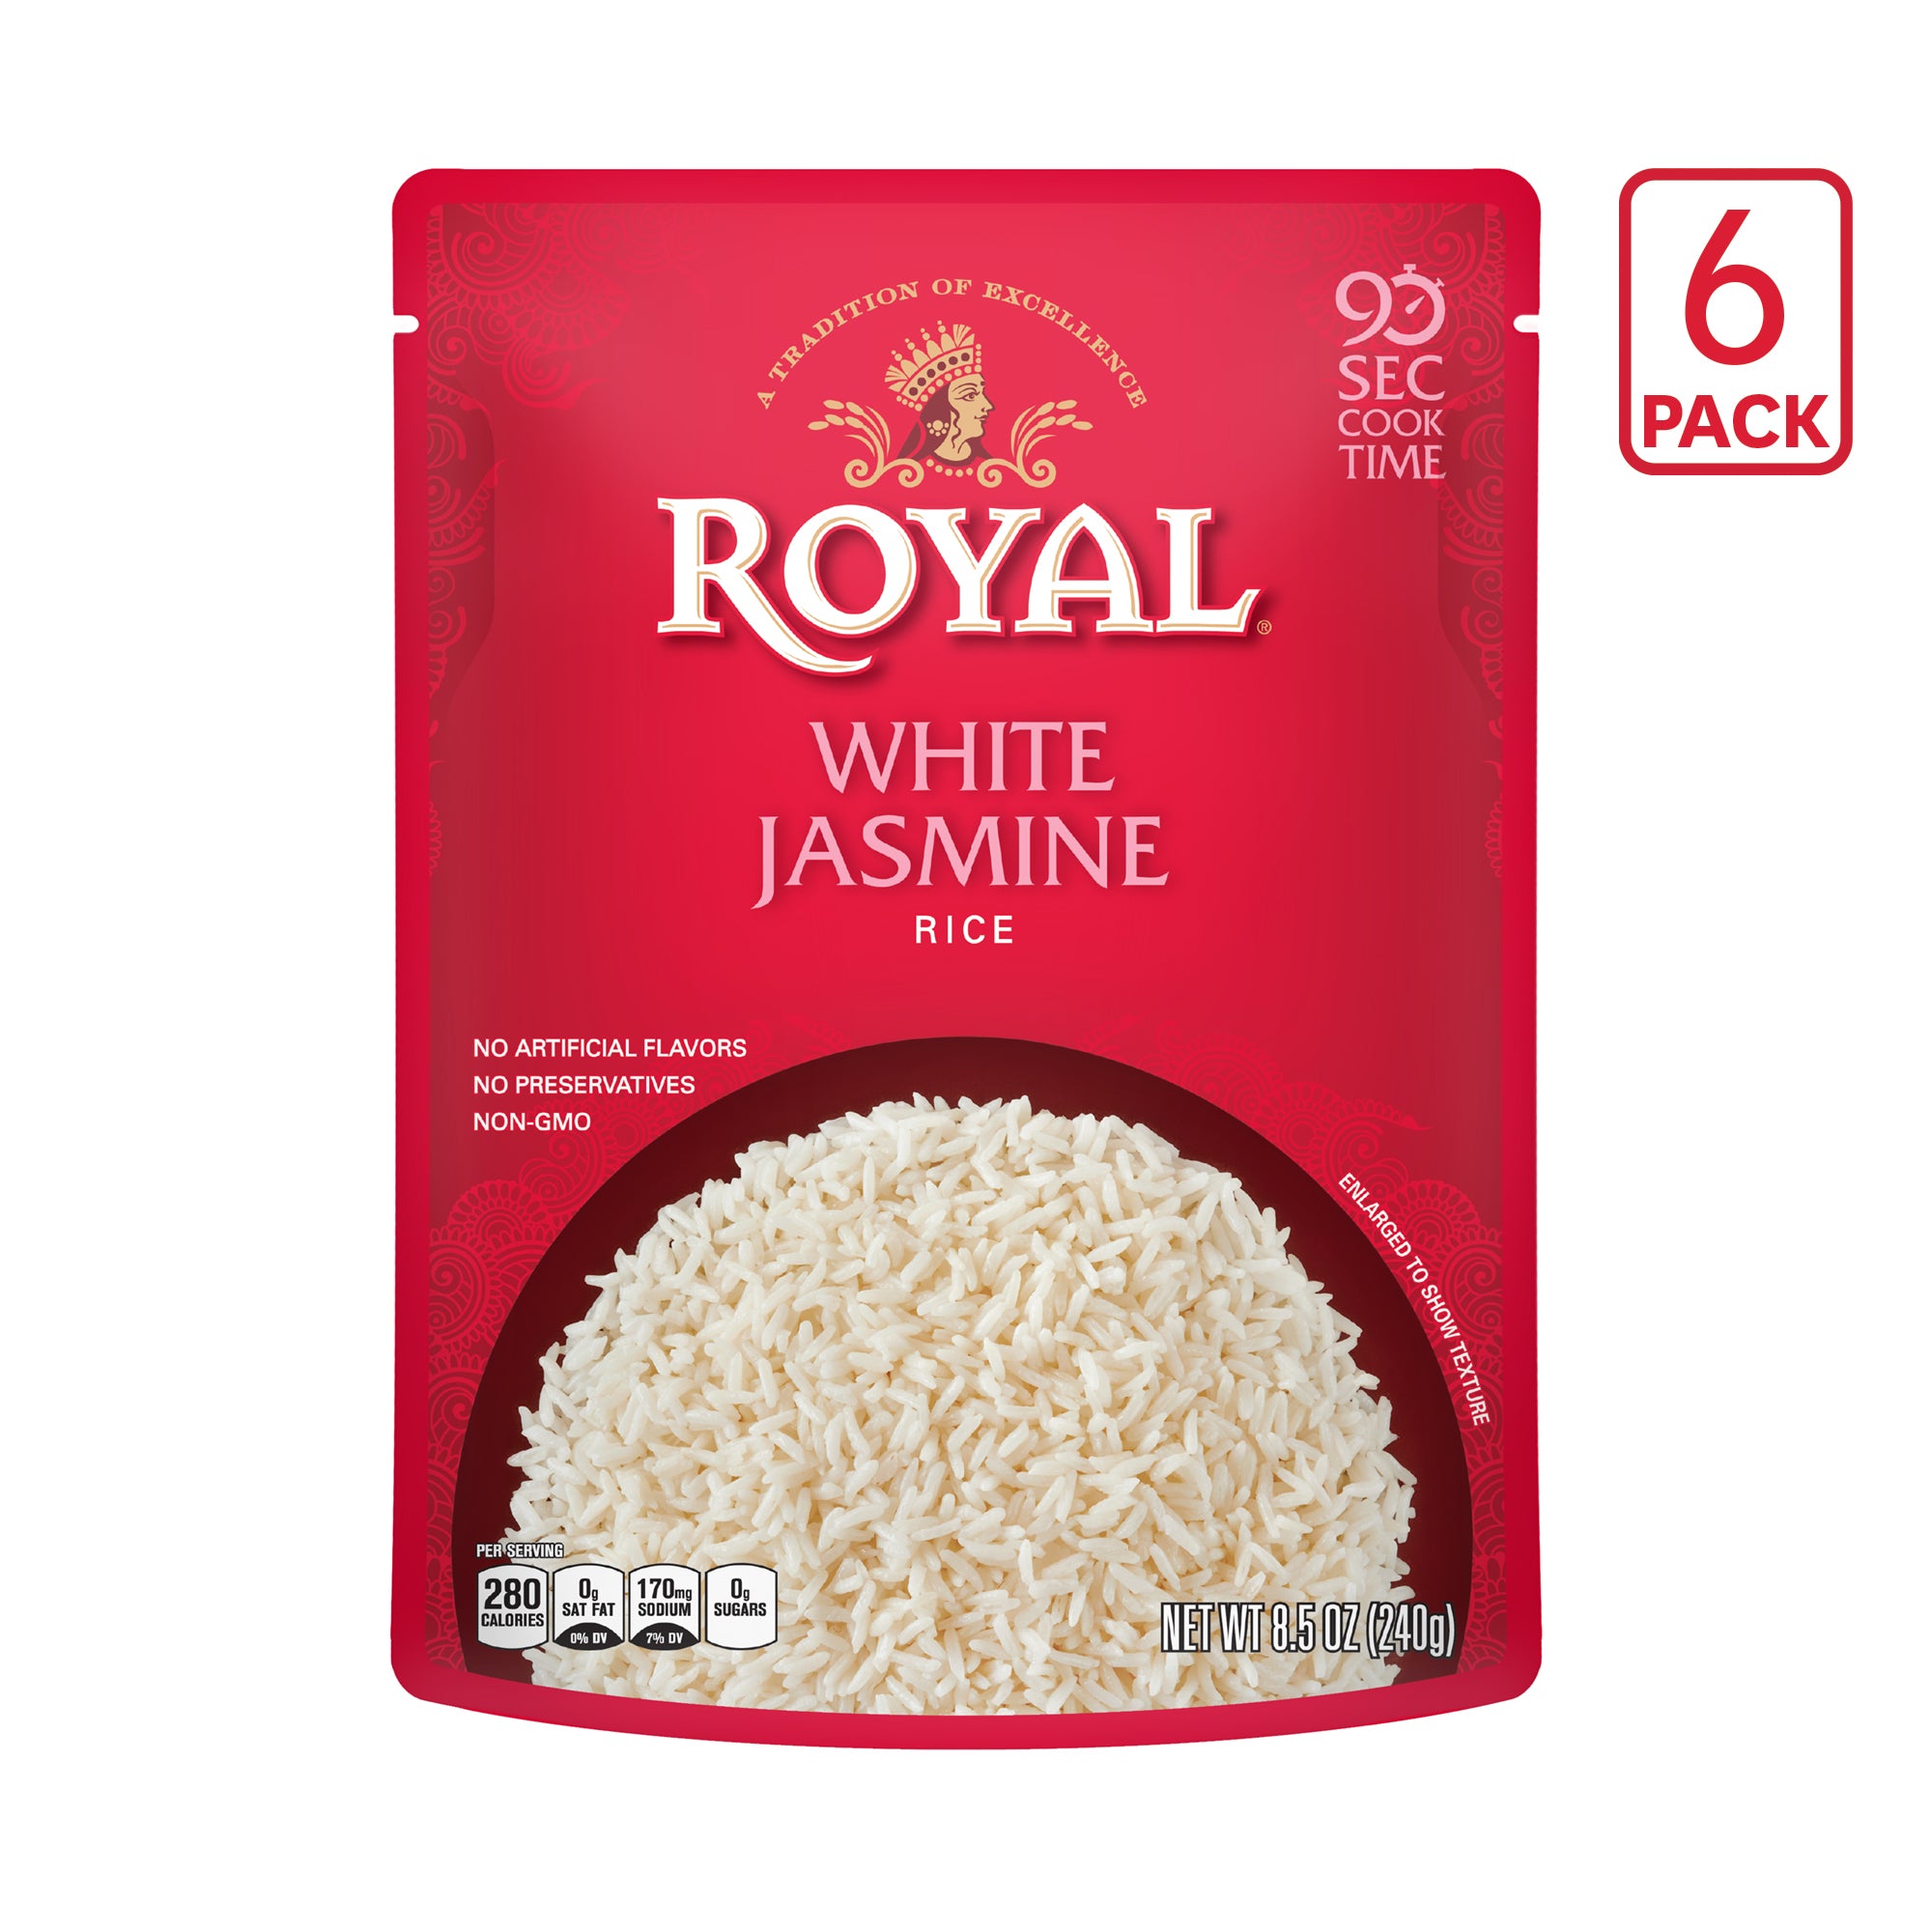 RTH Royal White Jasmine 6-pack Ecomm